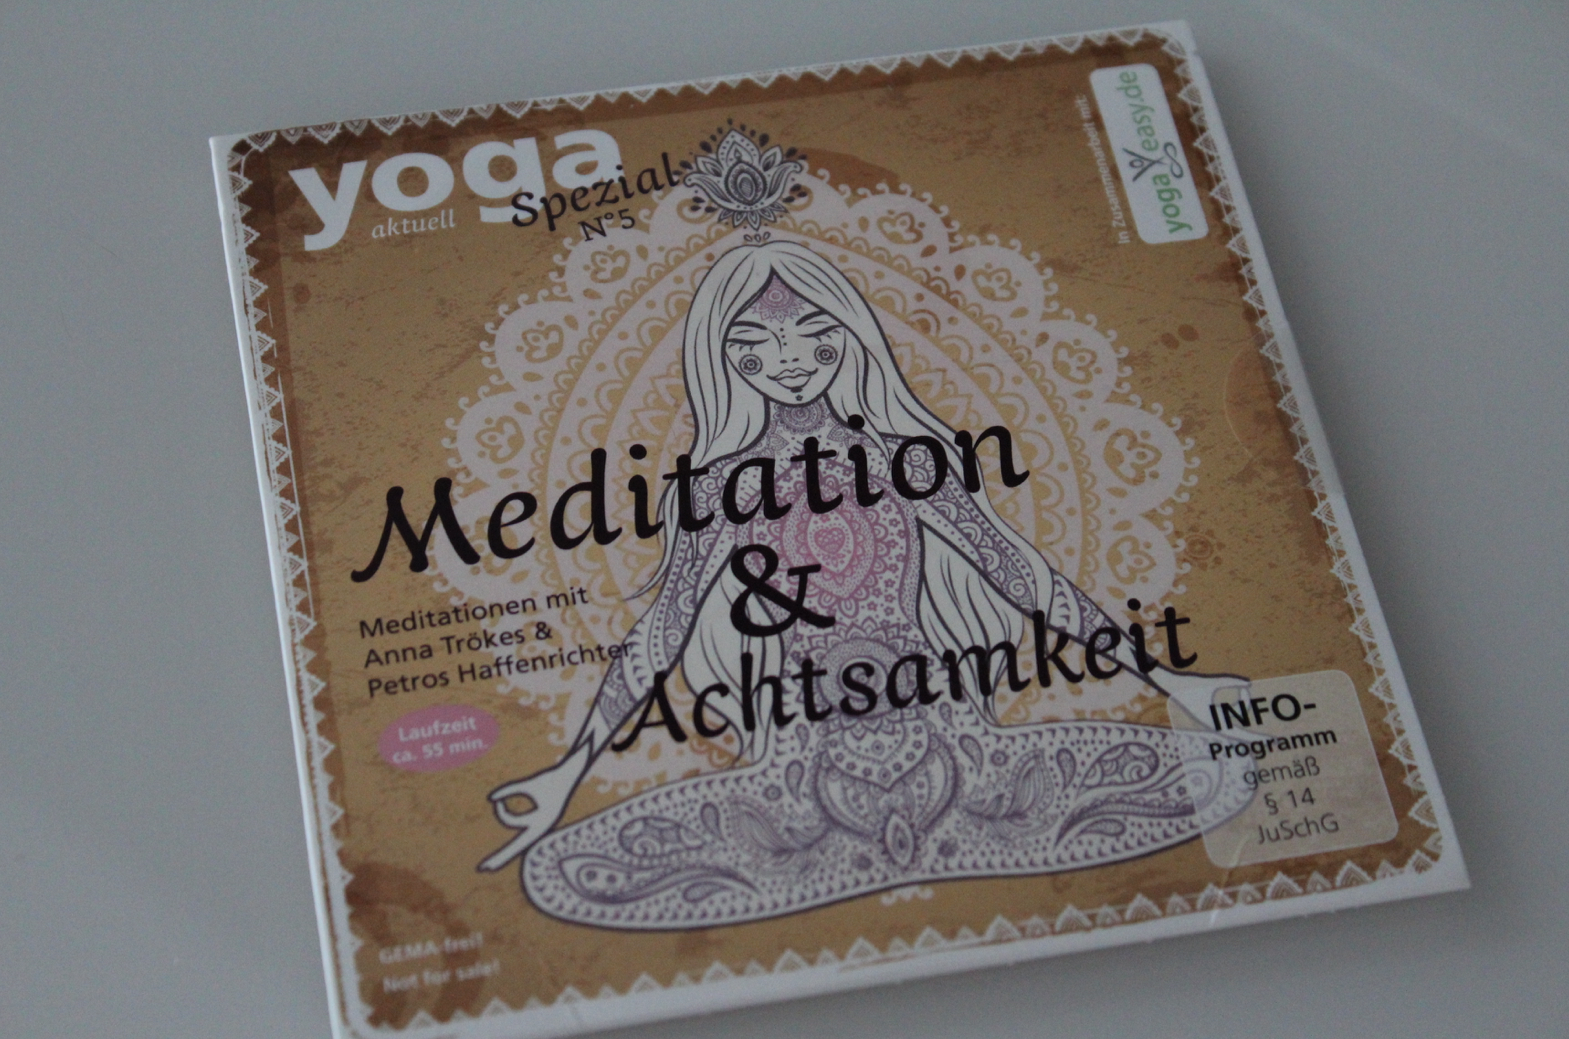 18 Cd Yoga Aktuell Spezial Meditation Anna Trökes